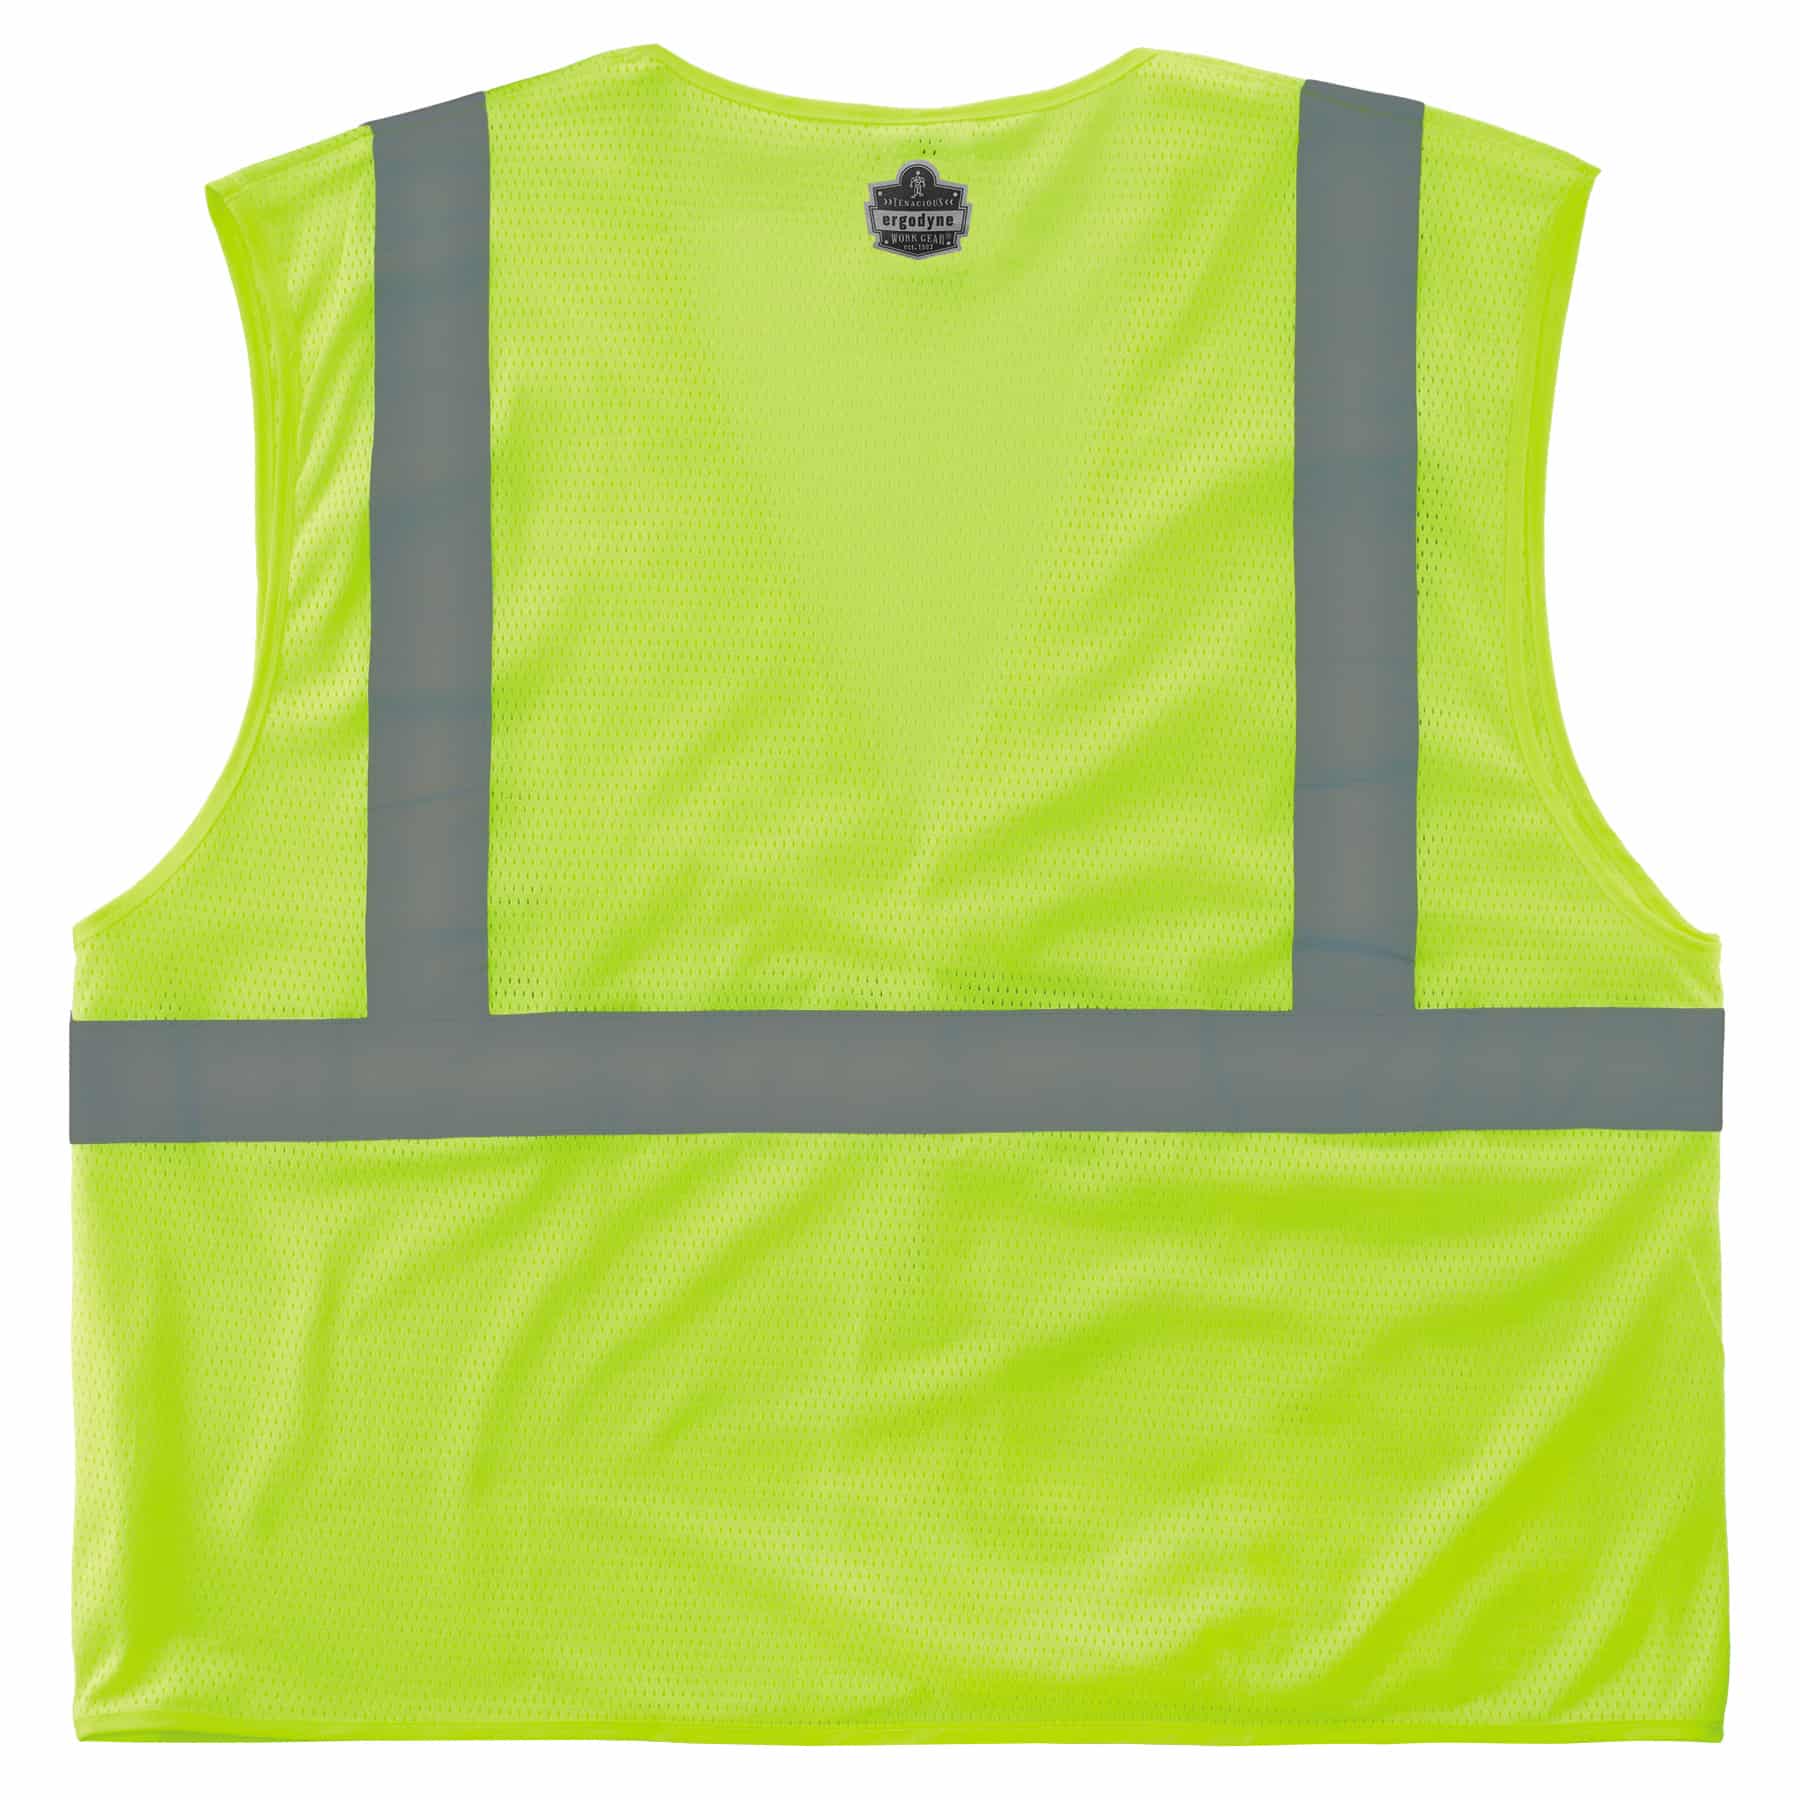 https://www.ergodyne.com/sites/default/files/product-images/21021-8210hl-economy-mesh-vest-lime-back.jpg